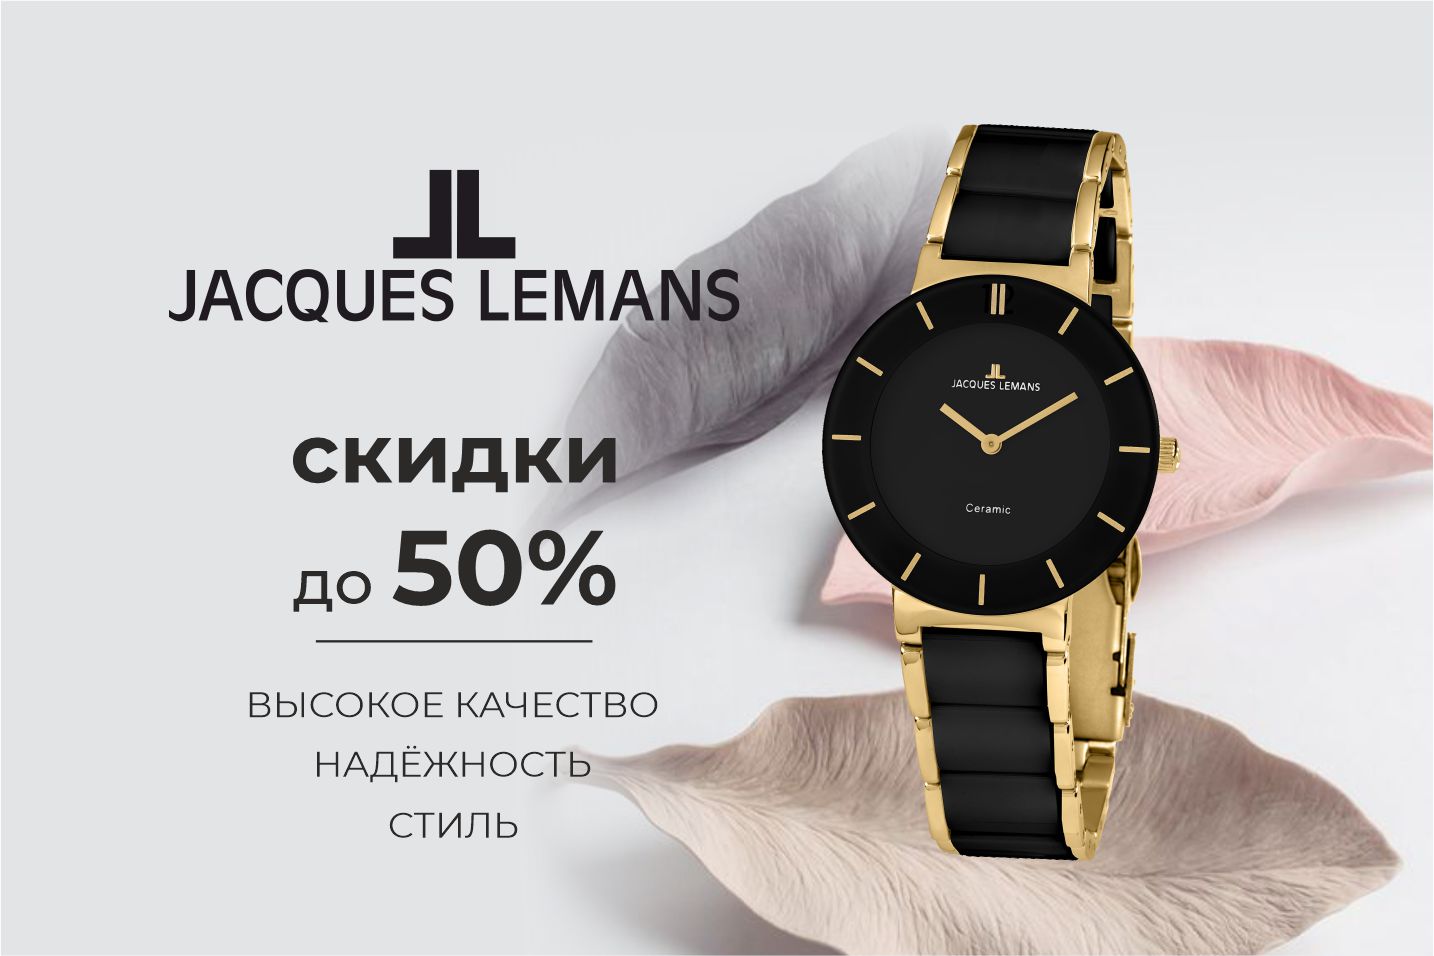 Акция на часы Jacques Lemans